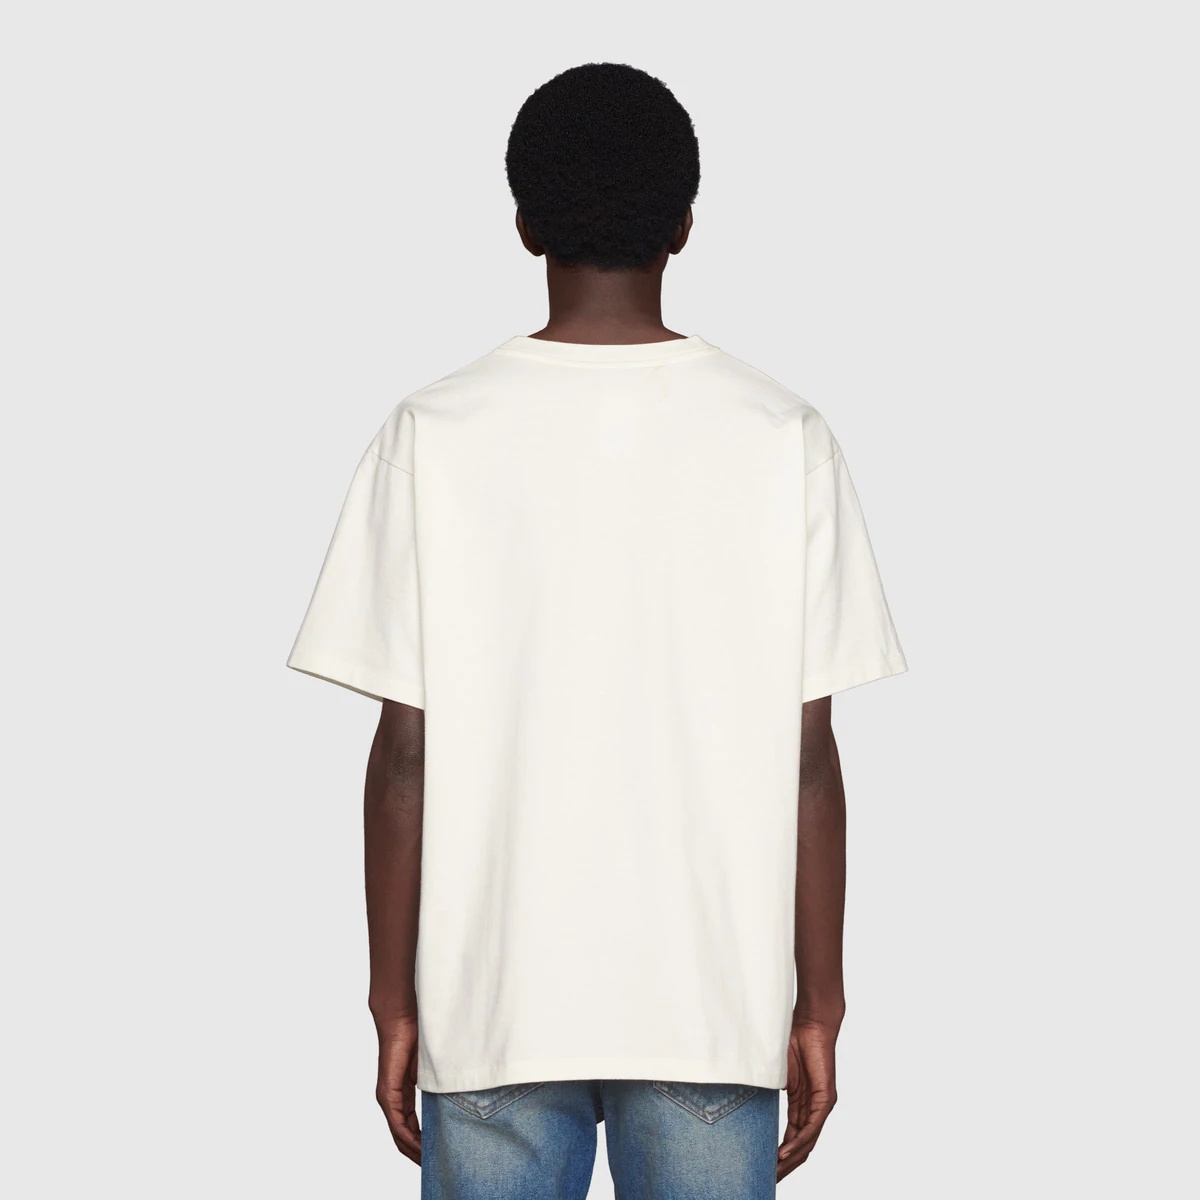 "Original Gucci" print oversize T-shirt - 4